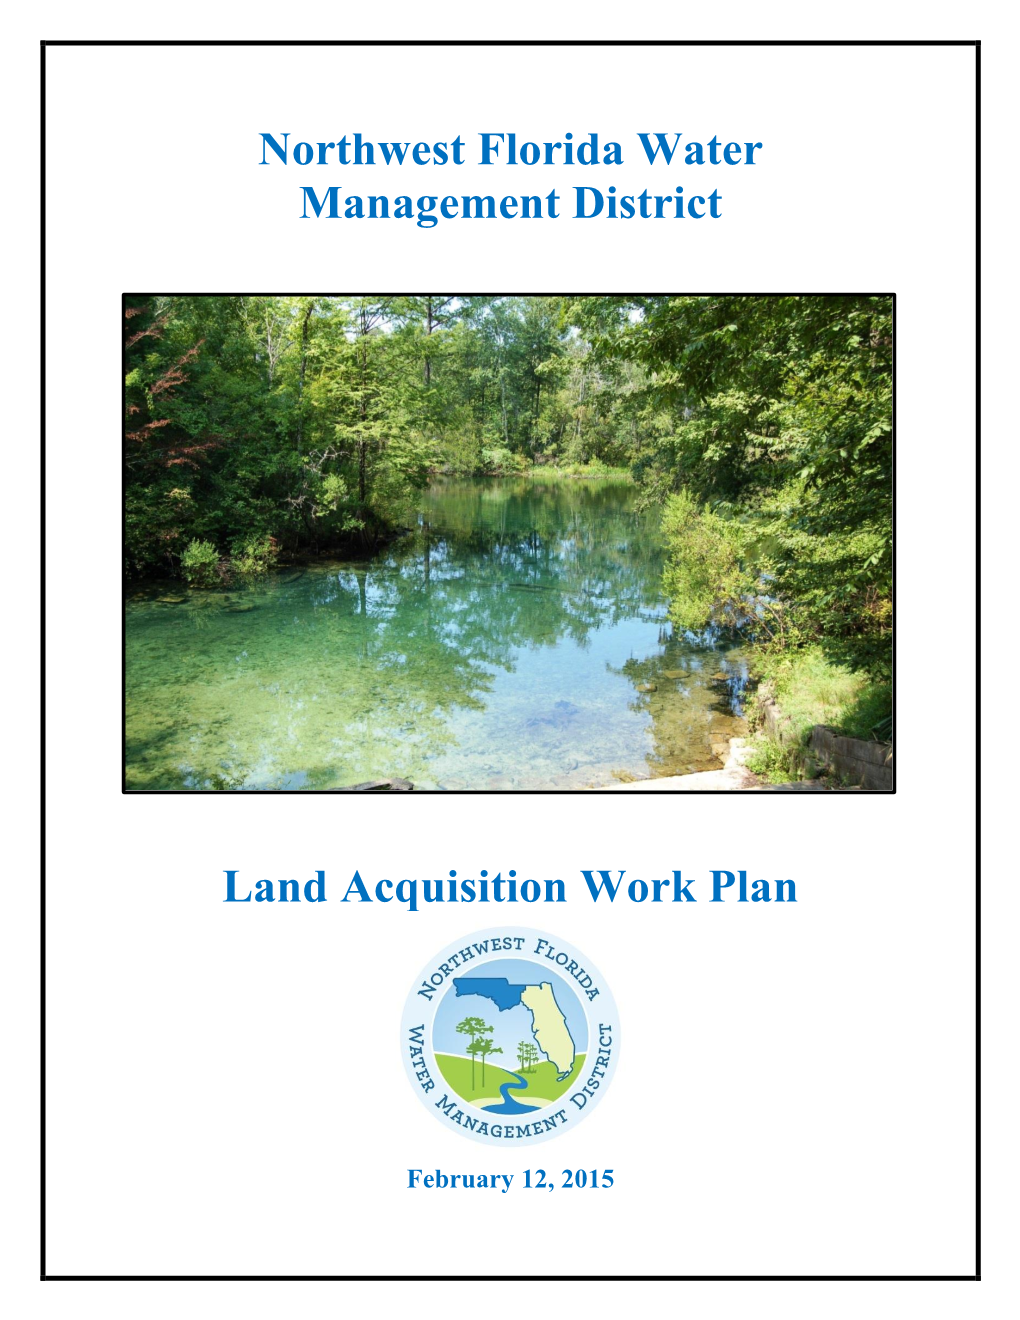 2015 Land Acquisition Work Plan